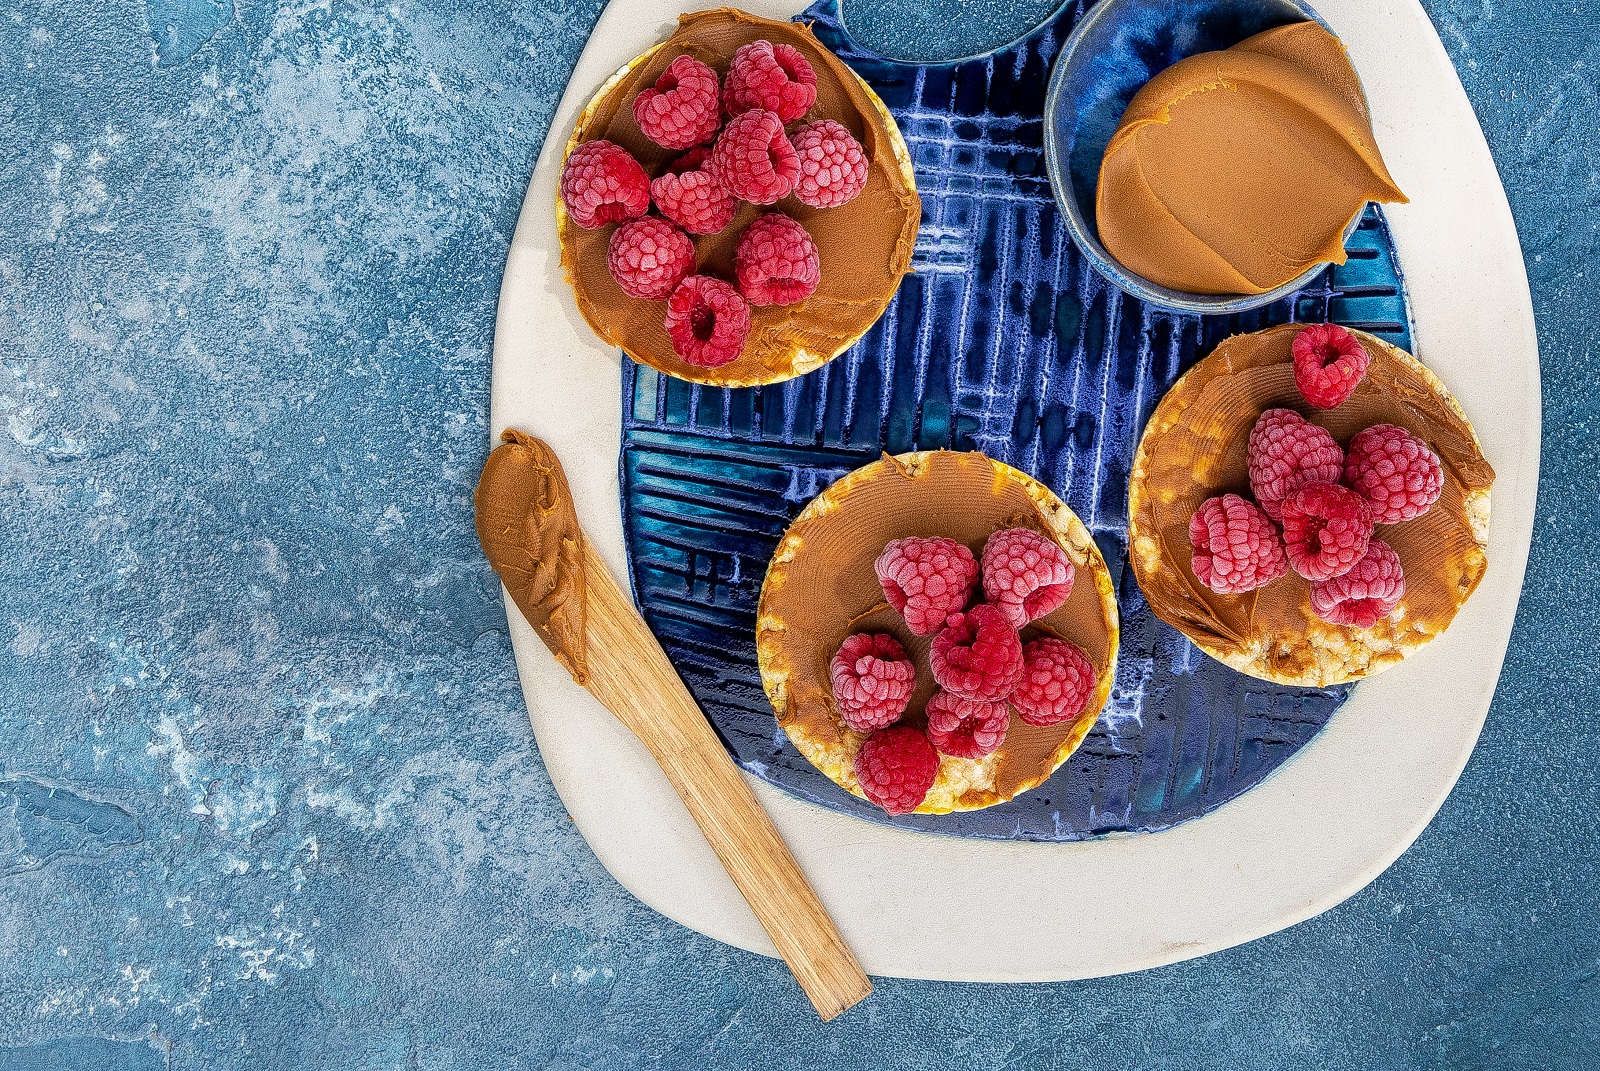 Lotus Biscoff Spread & Frozen Raspberries on Corn Thins slices